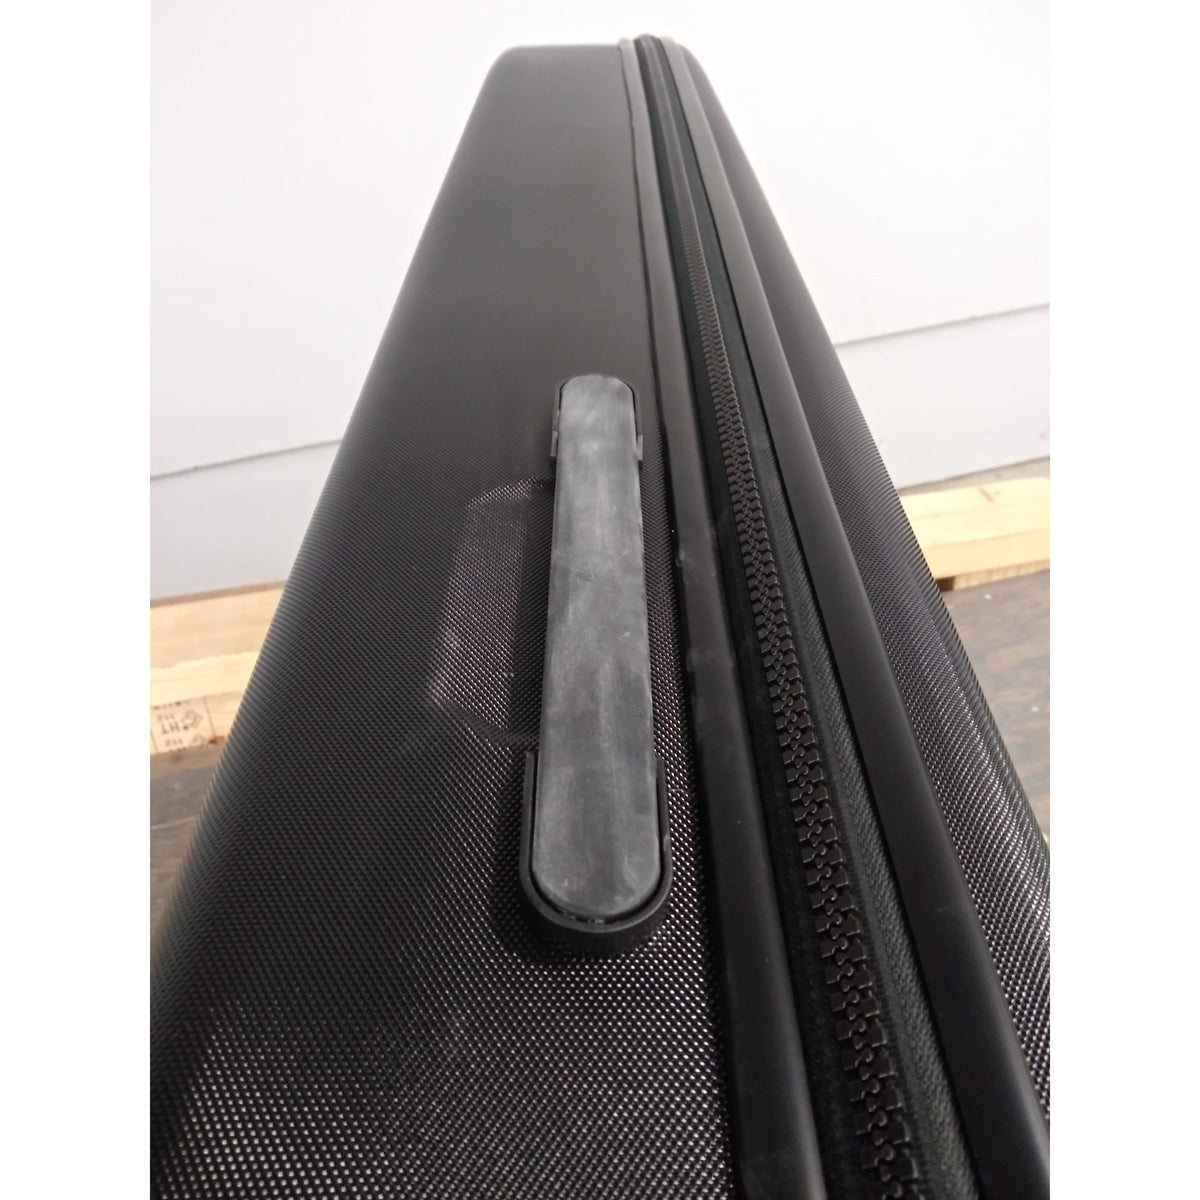 Dakine Low Roller Snowboard Hardside - Black - 165 cm - Used - Acceptable